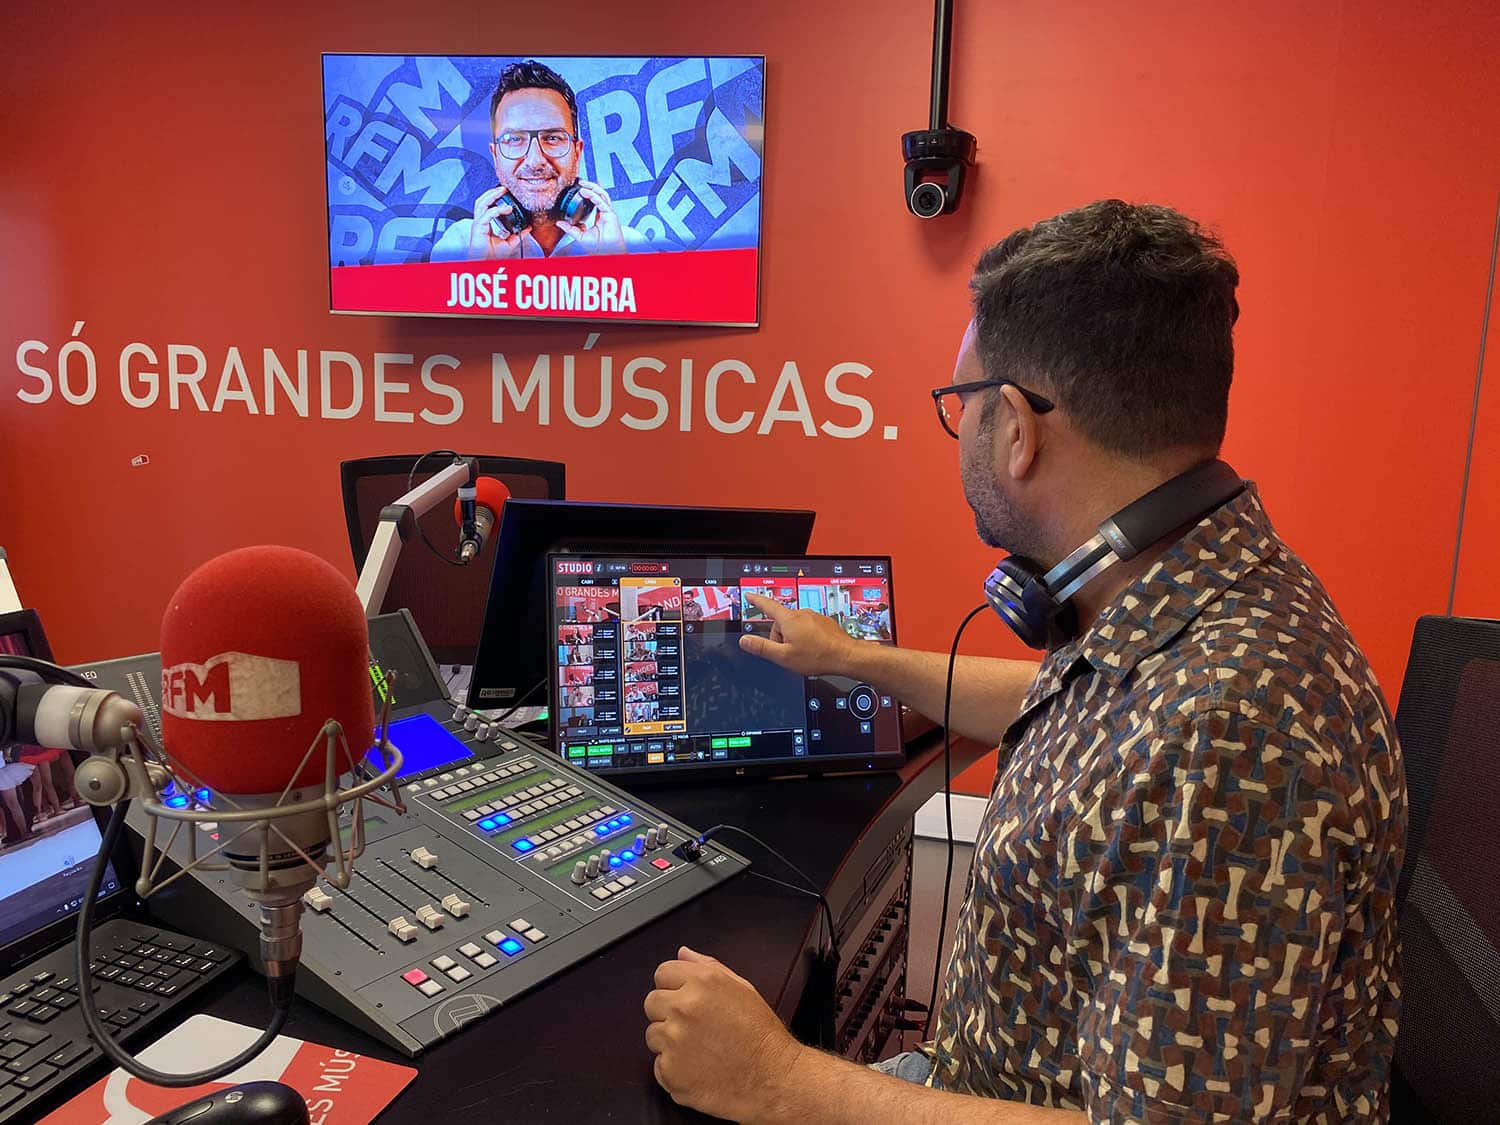 RFM’s José Coimbra broadcasts from the studio.